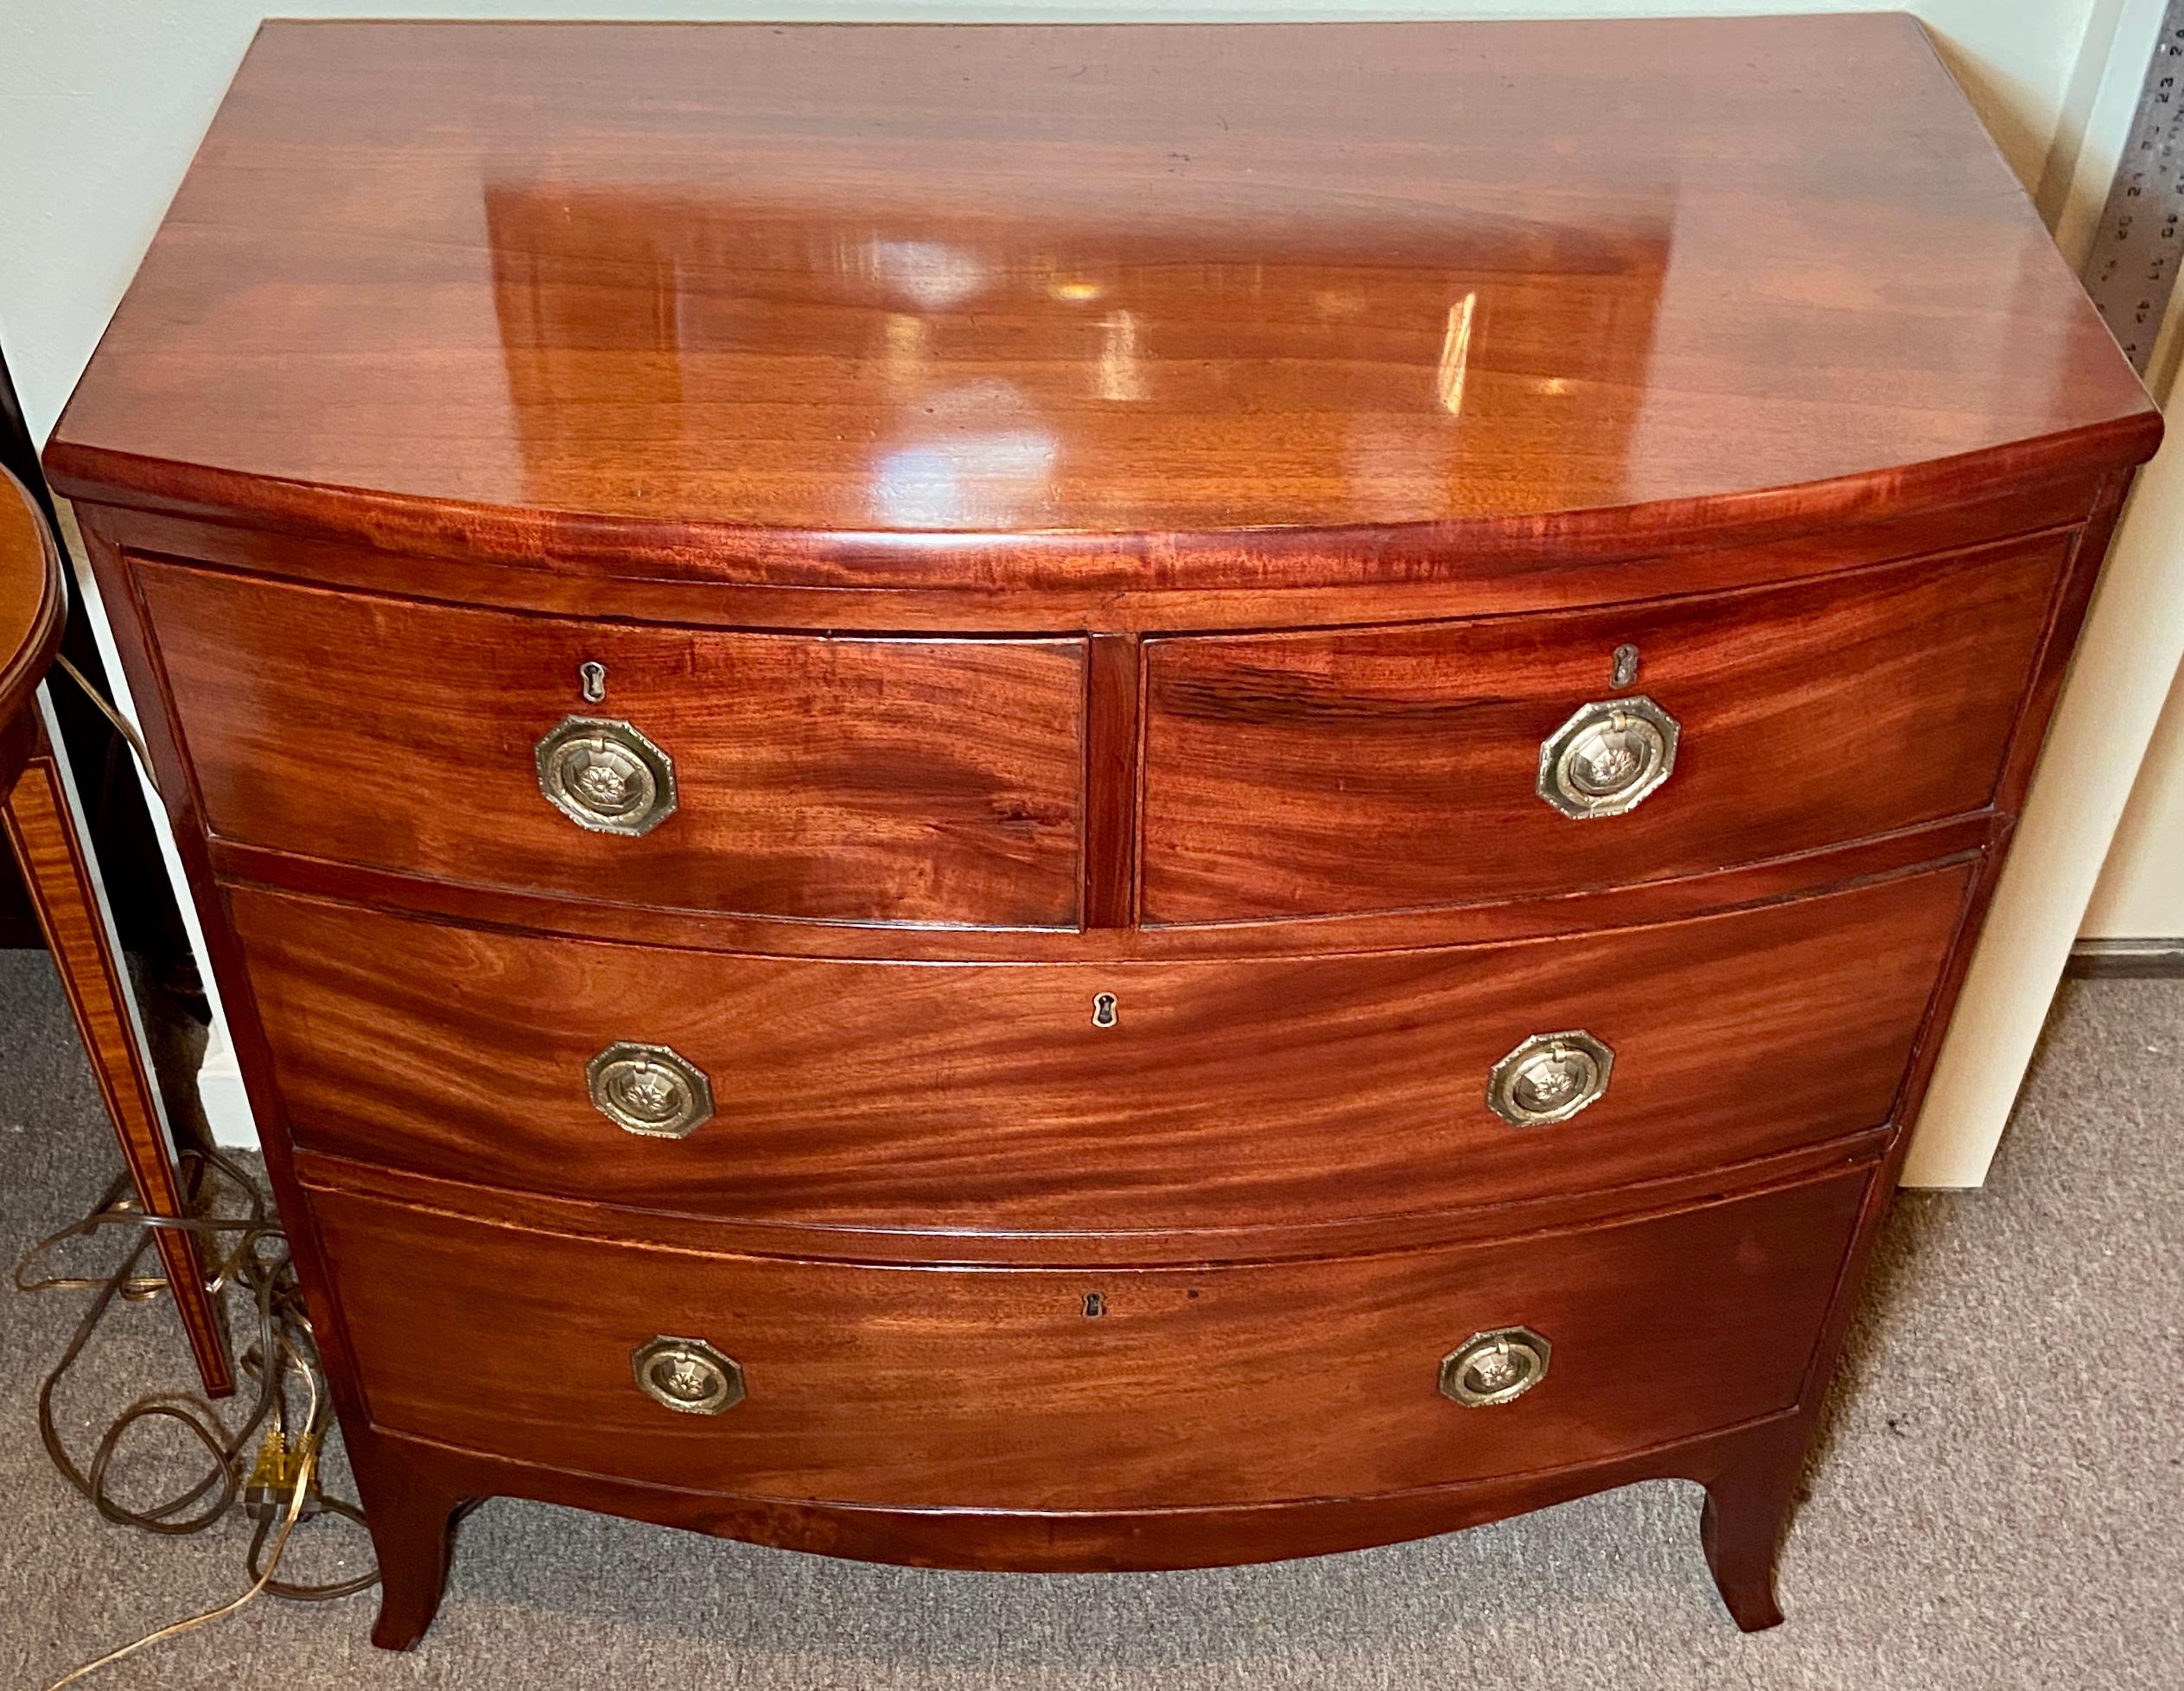 Antique 19th century English mahogany bowfront chest, circa 1860.